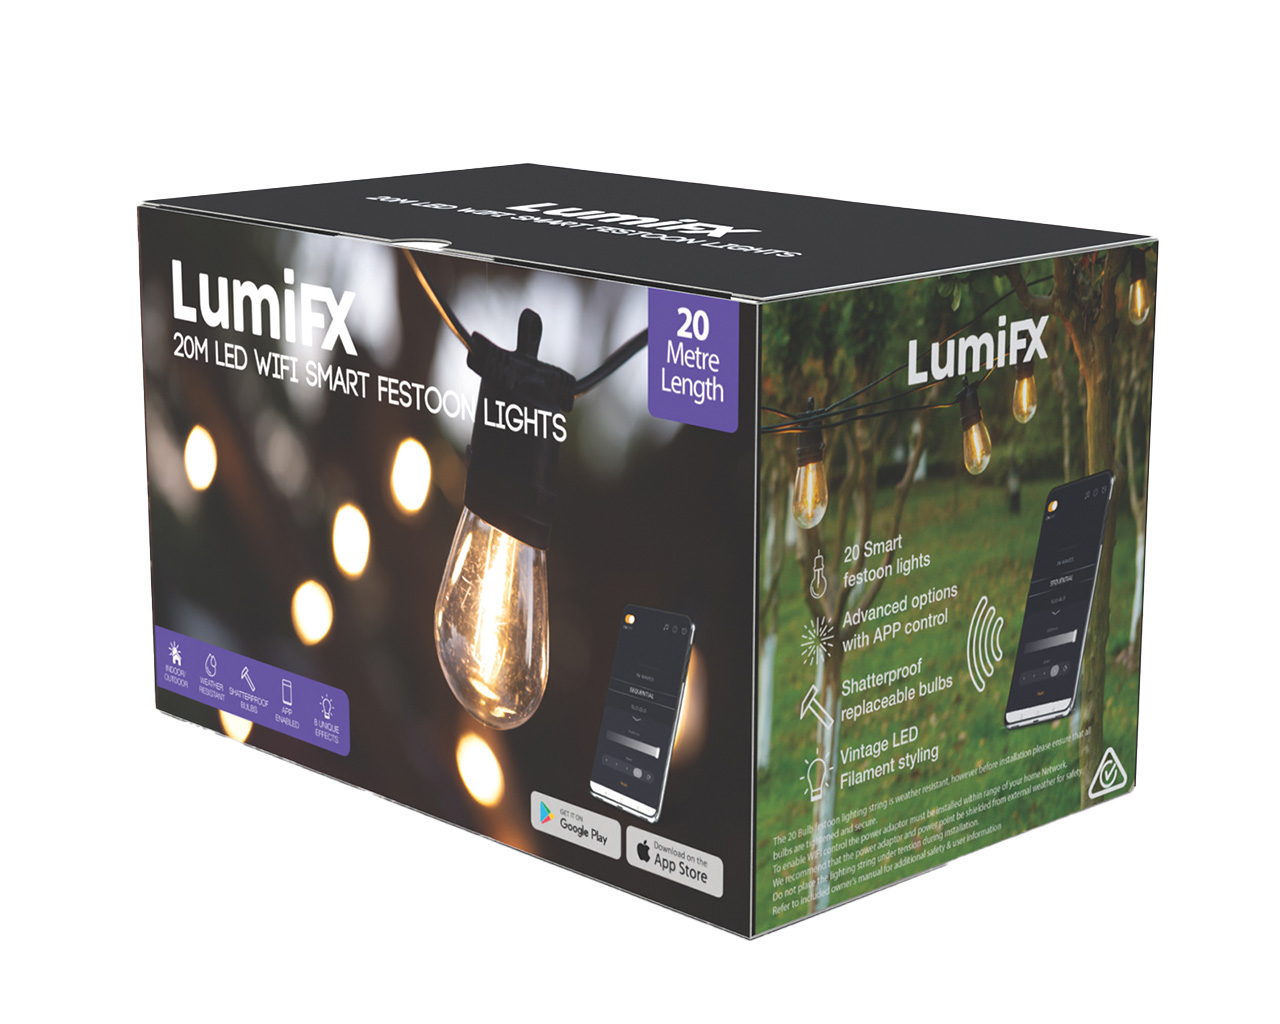 LumiFX 20m Wi-Fi Smart Festoon Lights, , hi-res image number null